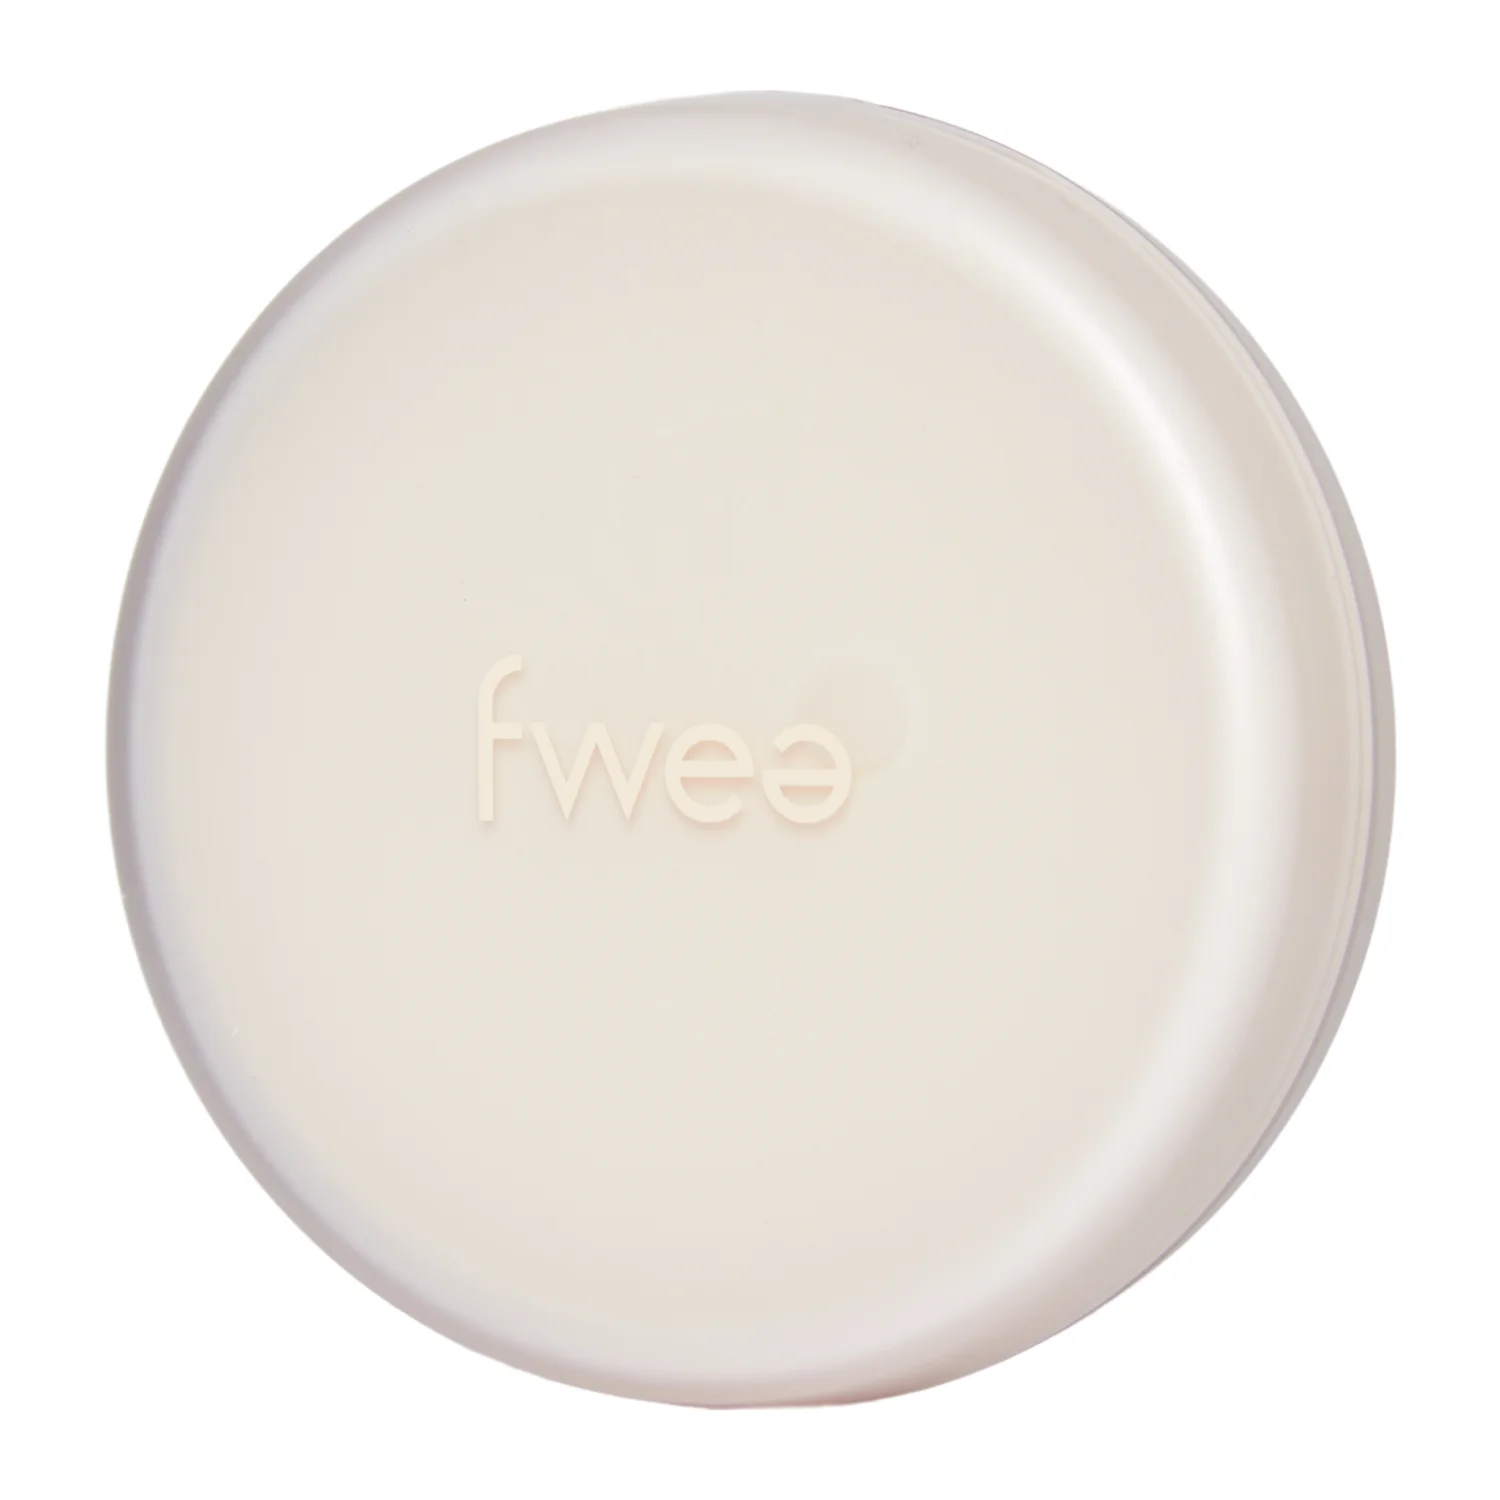 Fwee - Cushion Suede SPF50+ PA+++ - Увлажняющий тональный кушон для лица - 04 Natural Suede -15g